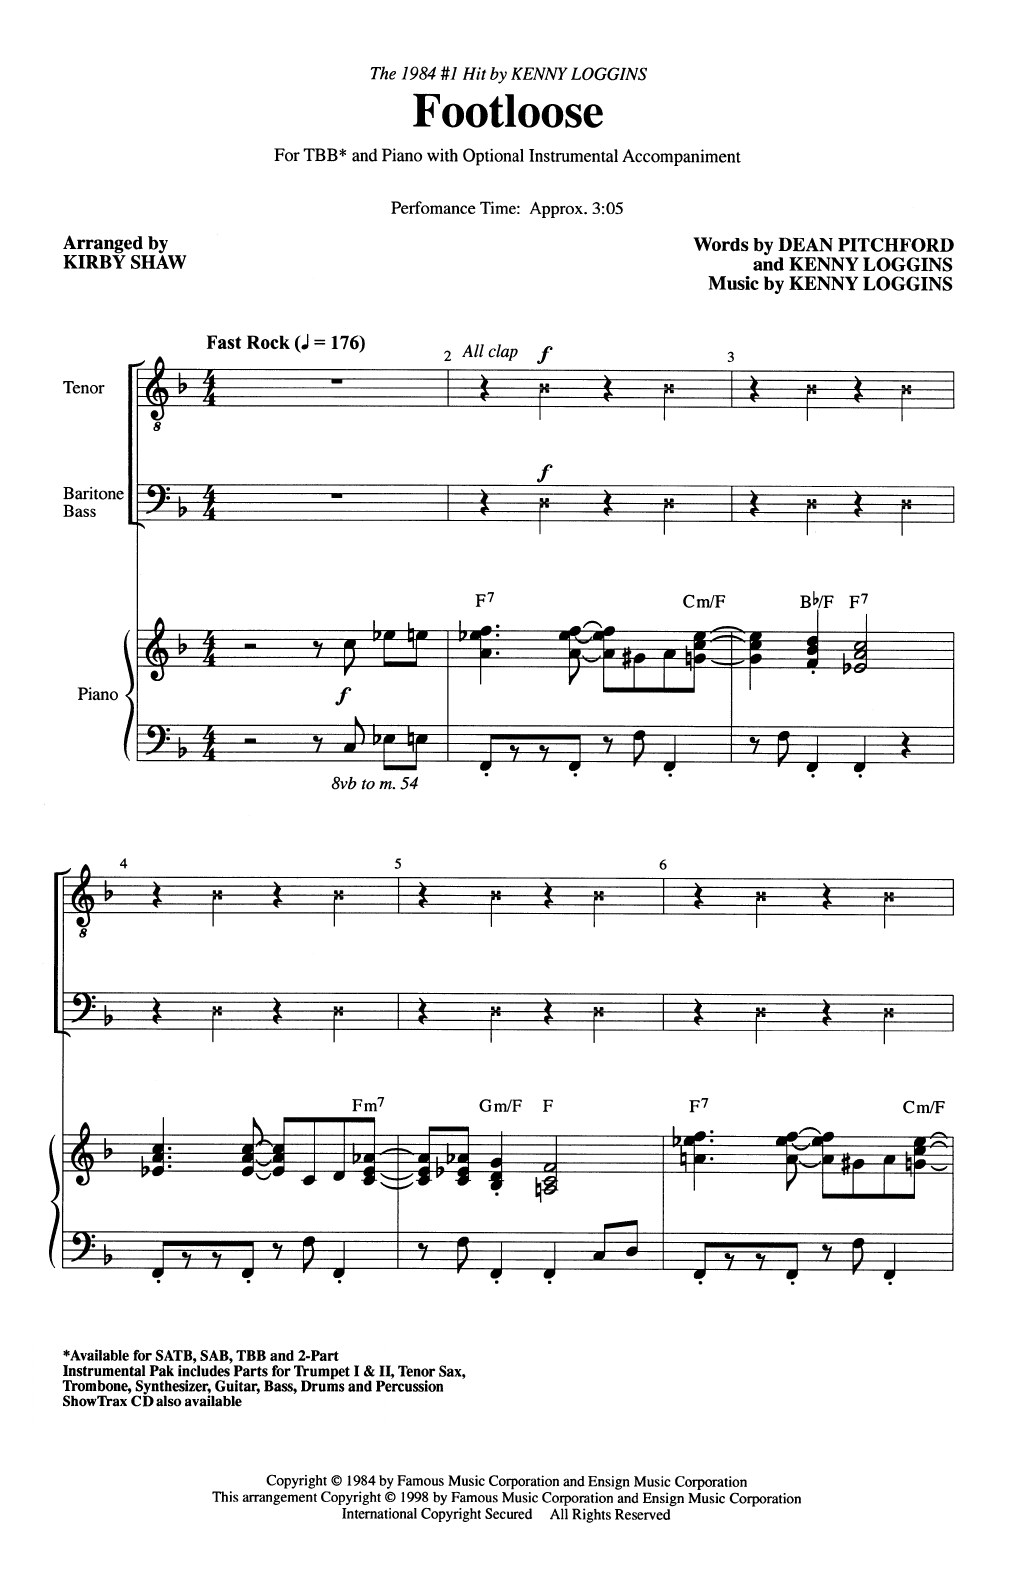 Kenny Loggins Footloose (arr. Kirby Shaw) Sheet Music Notes & Chords for SAB Choir - Download or Print PDF